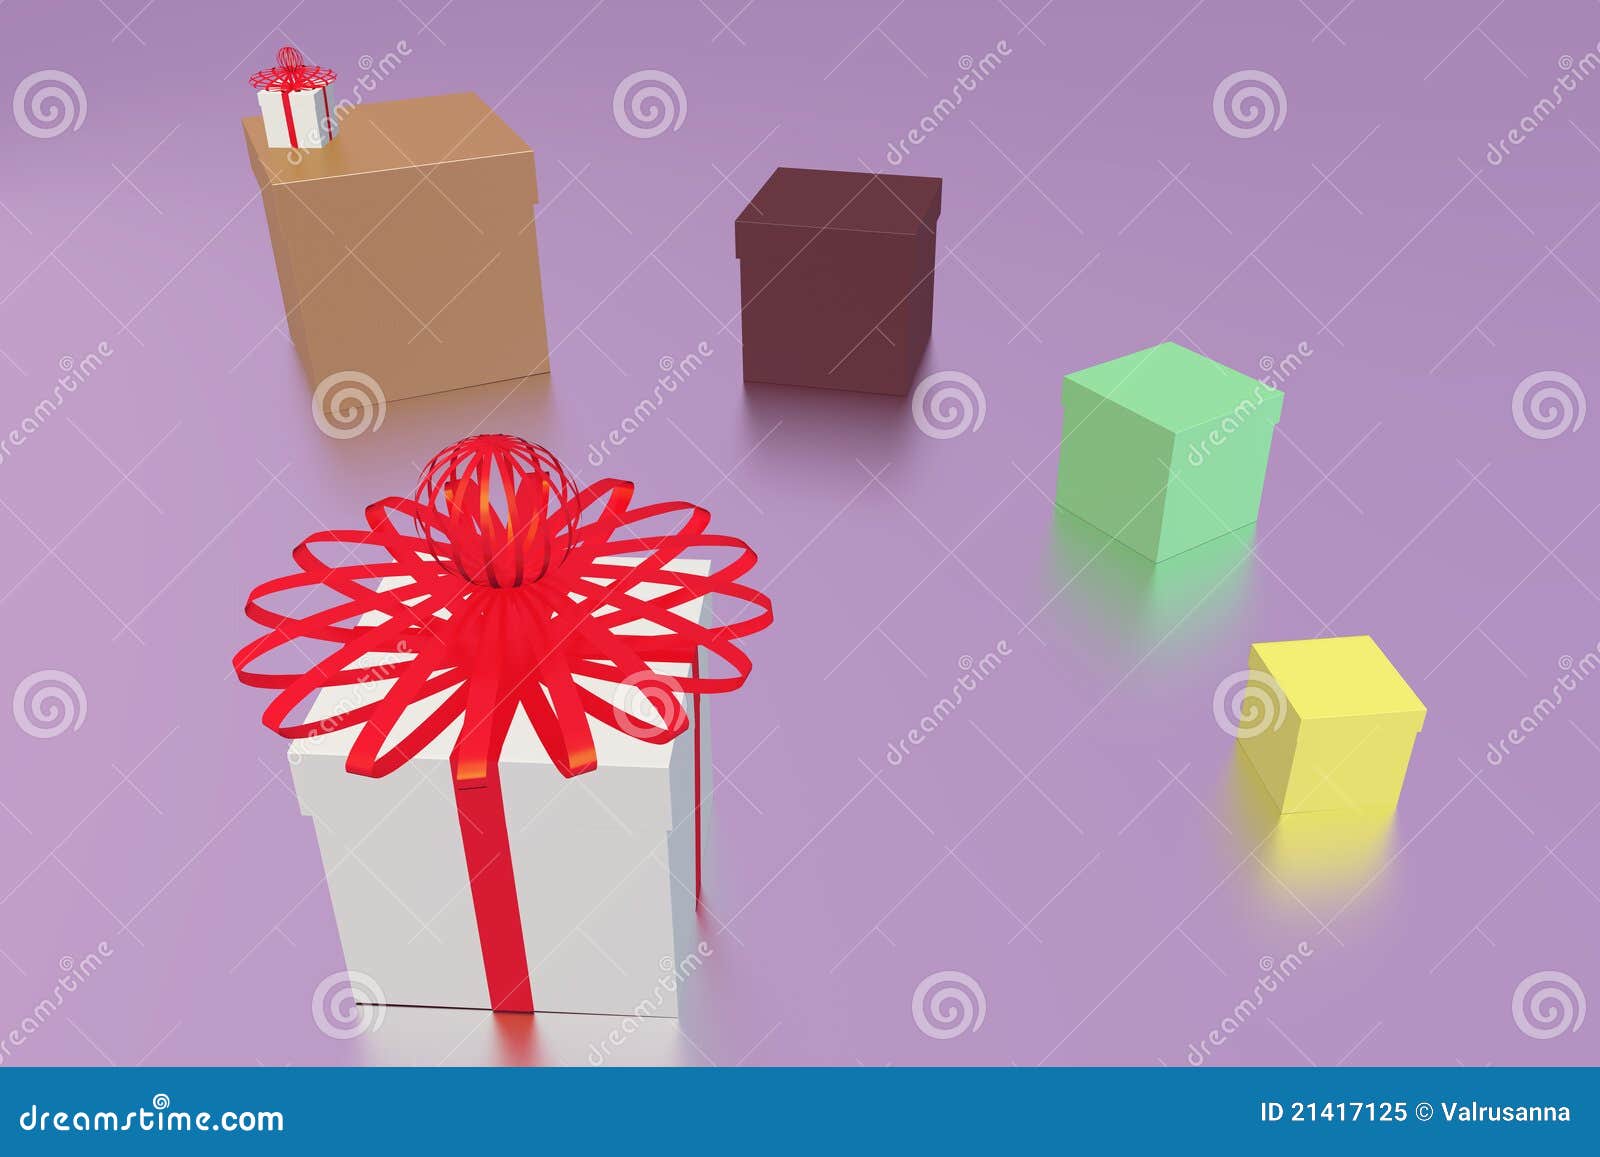 Six gift boxes stock illustration. Illustration of claret - 21417125